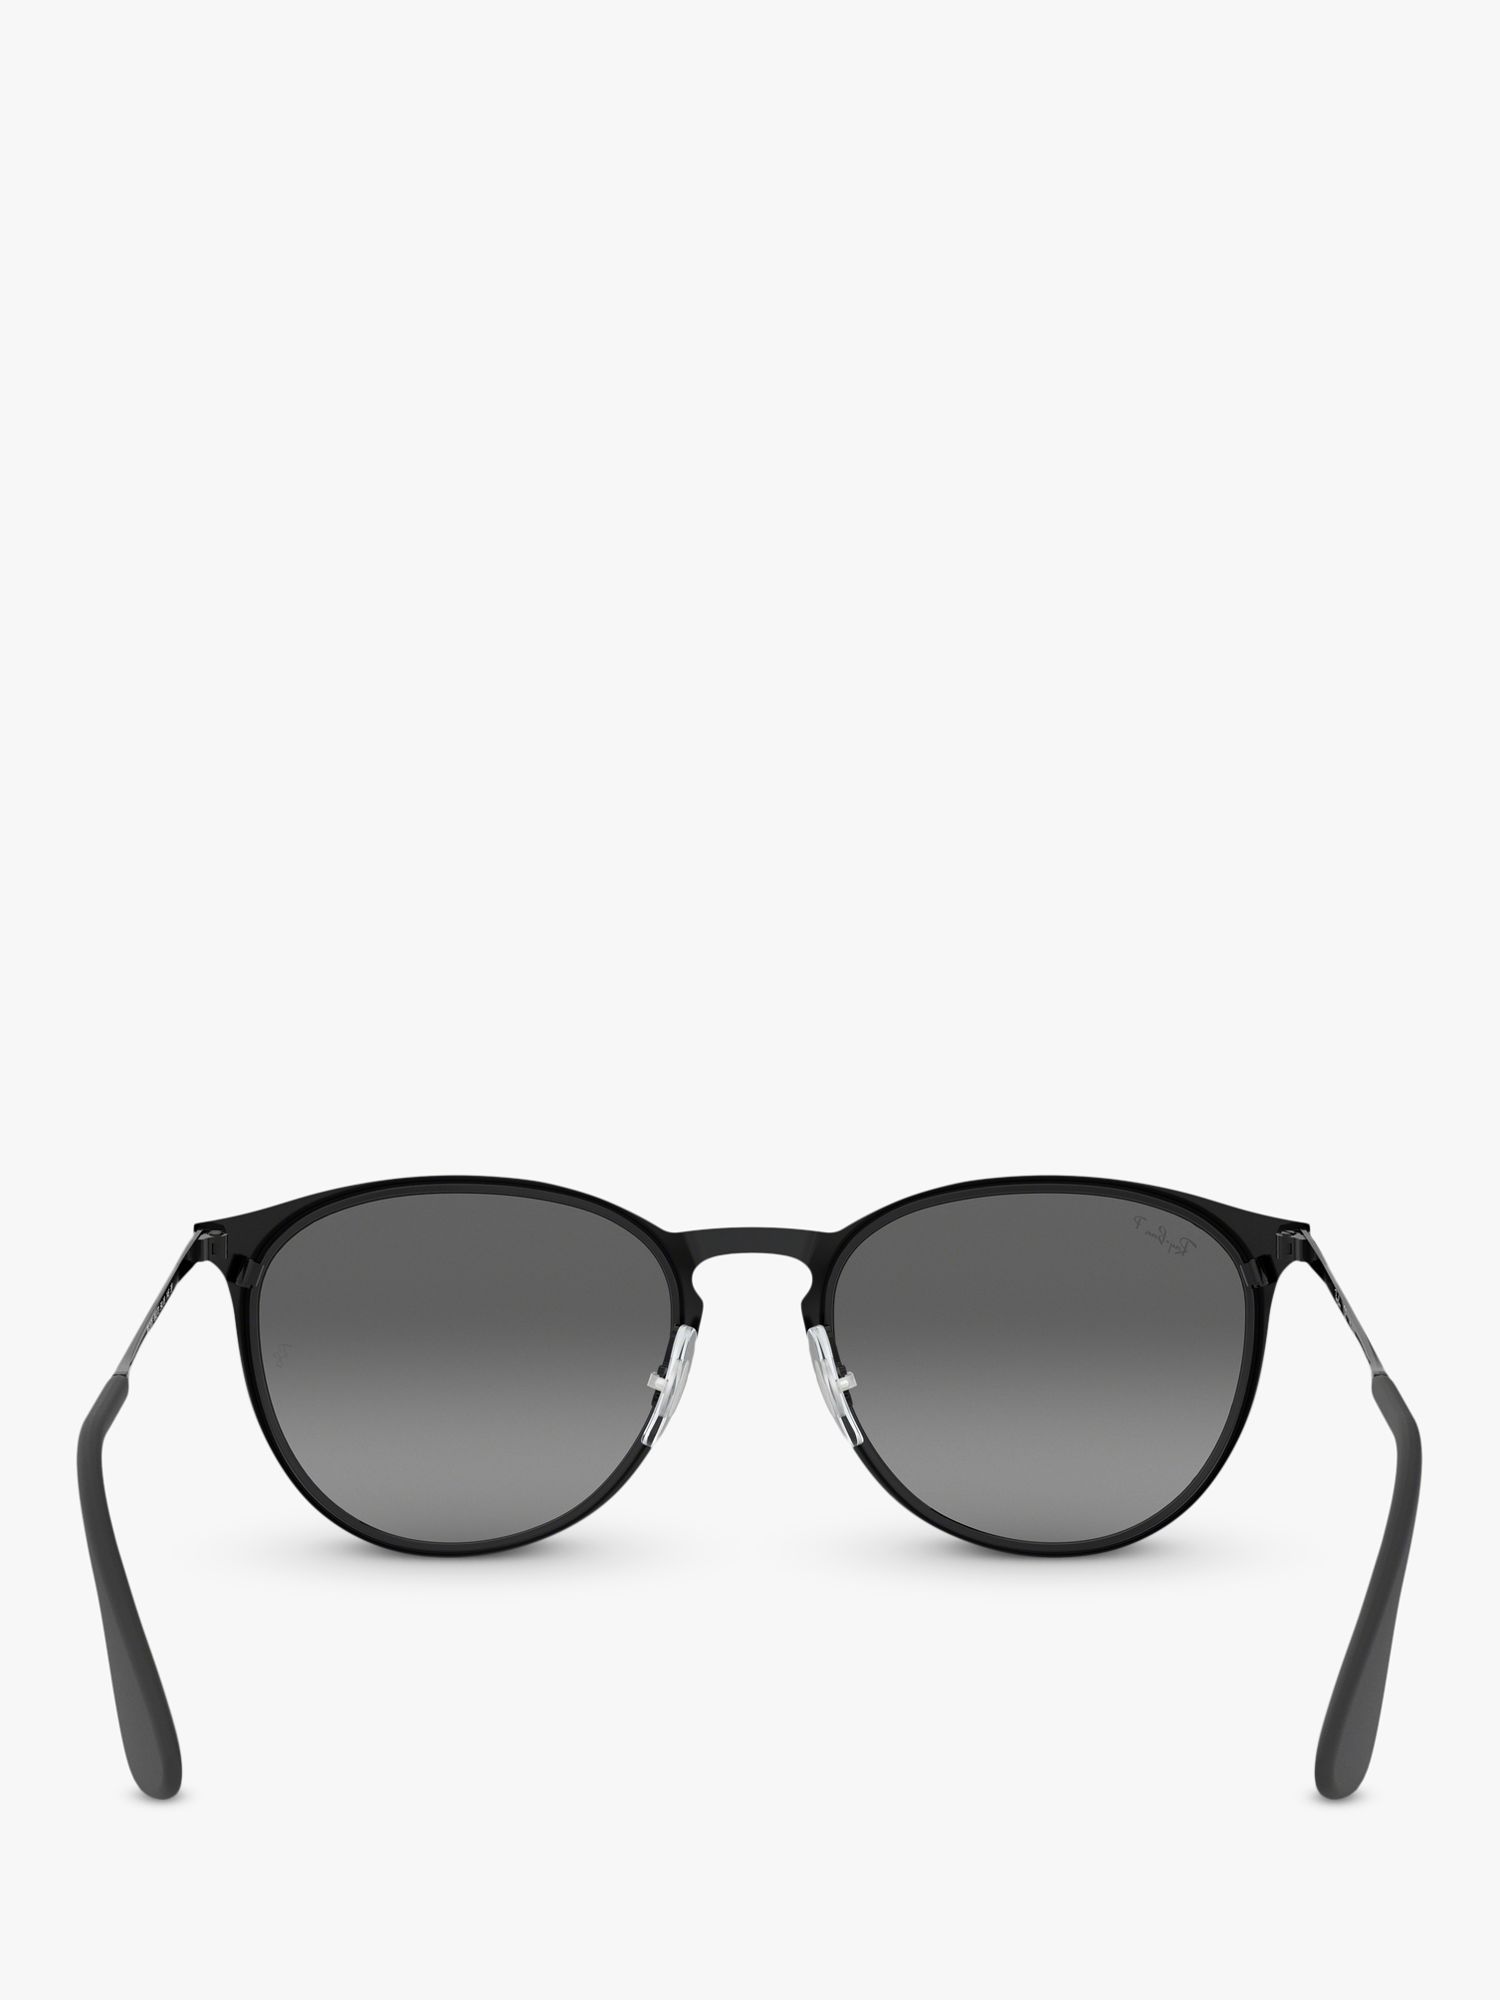 Ray-Ban RB3539 Women's Erika Polarised Oval Sunglasses, Black/Grey Gradient